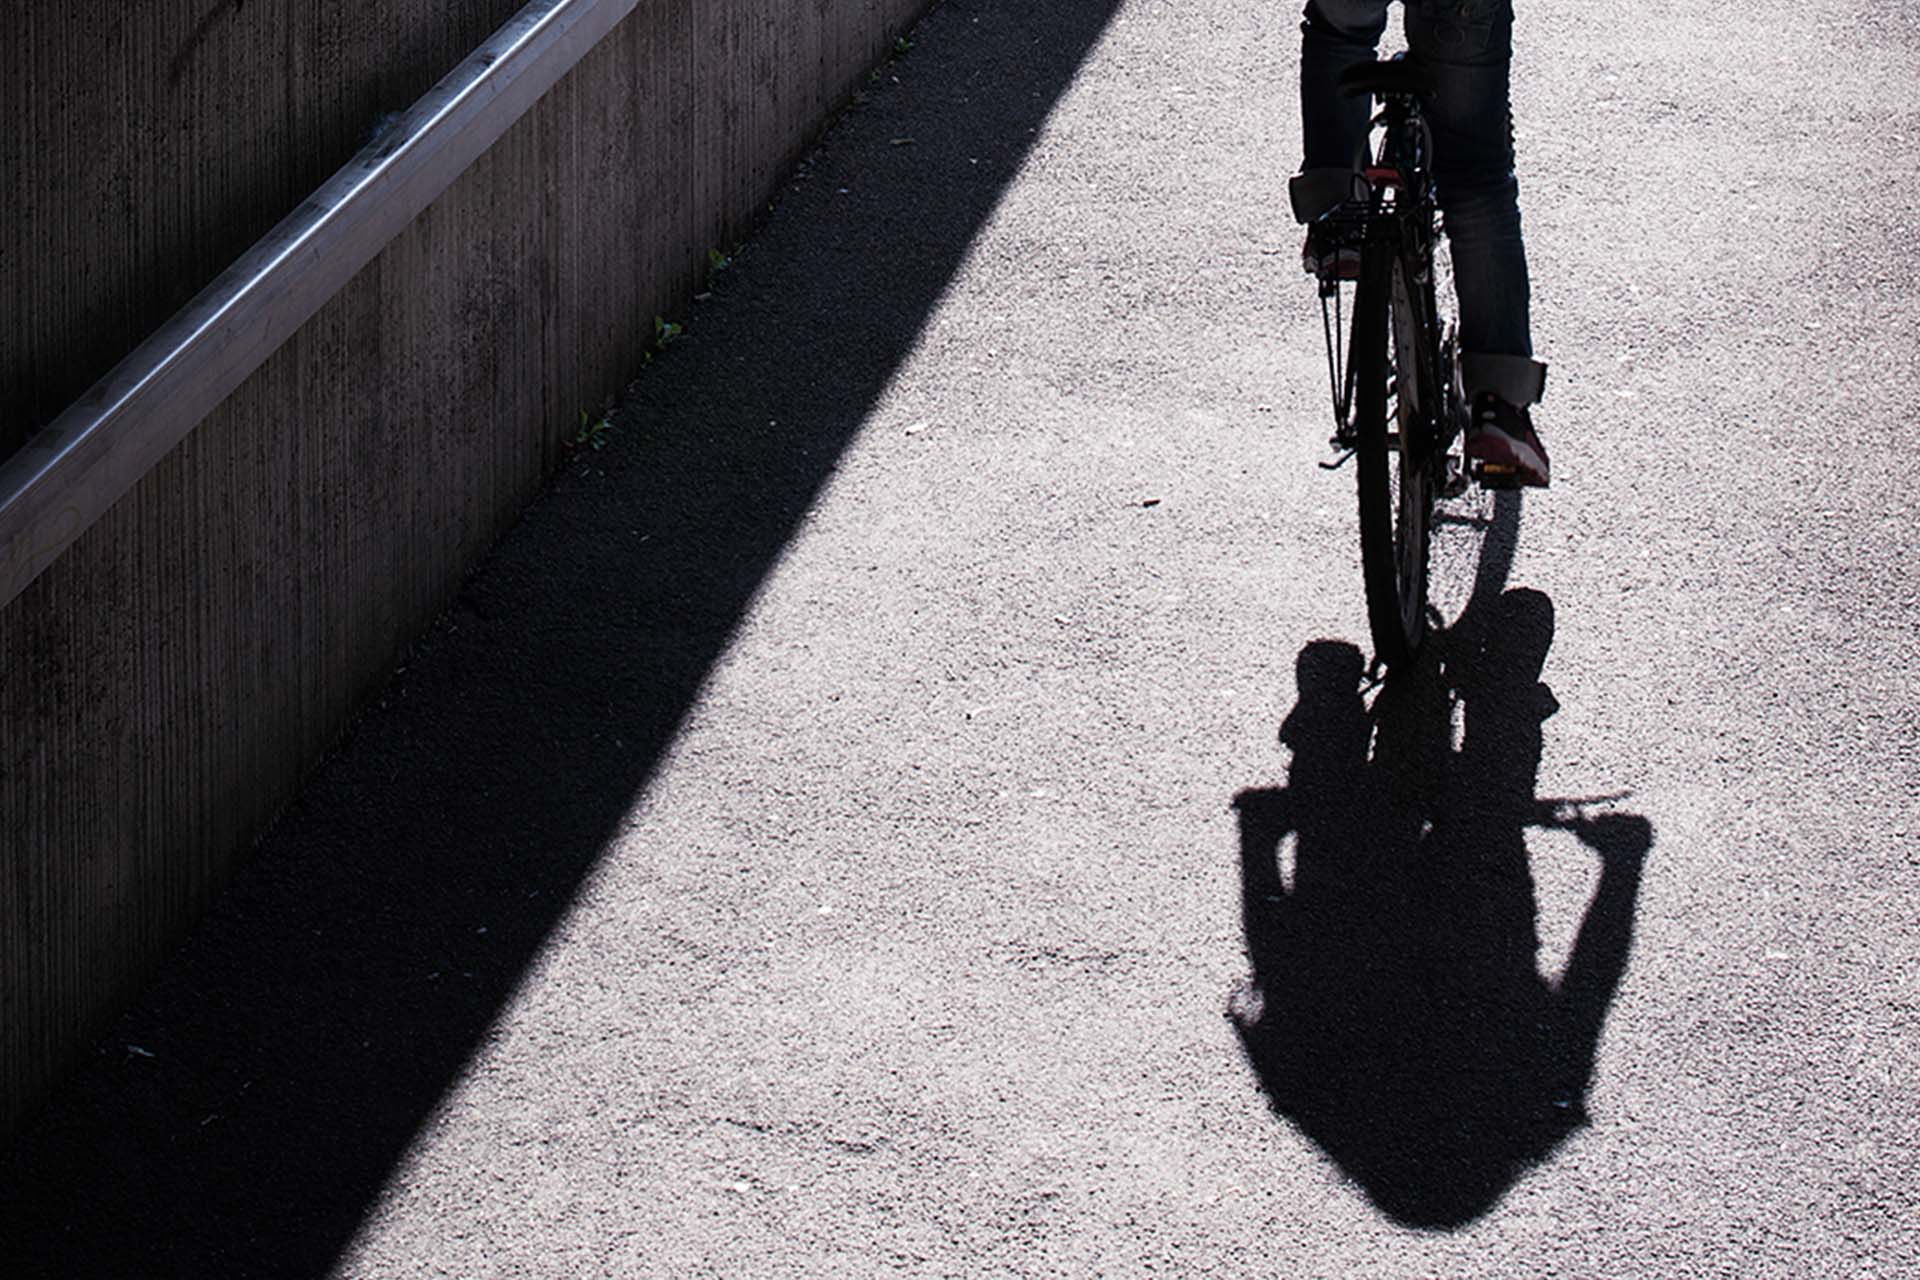 Asphalt path with shadow figure on bicycle